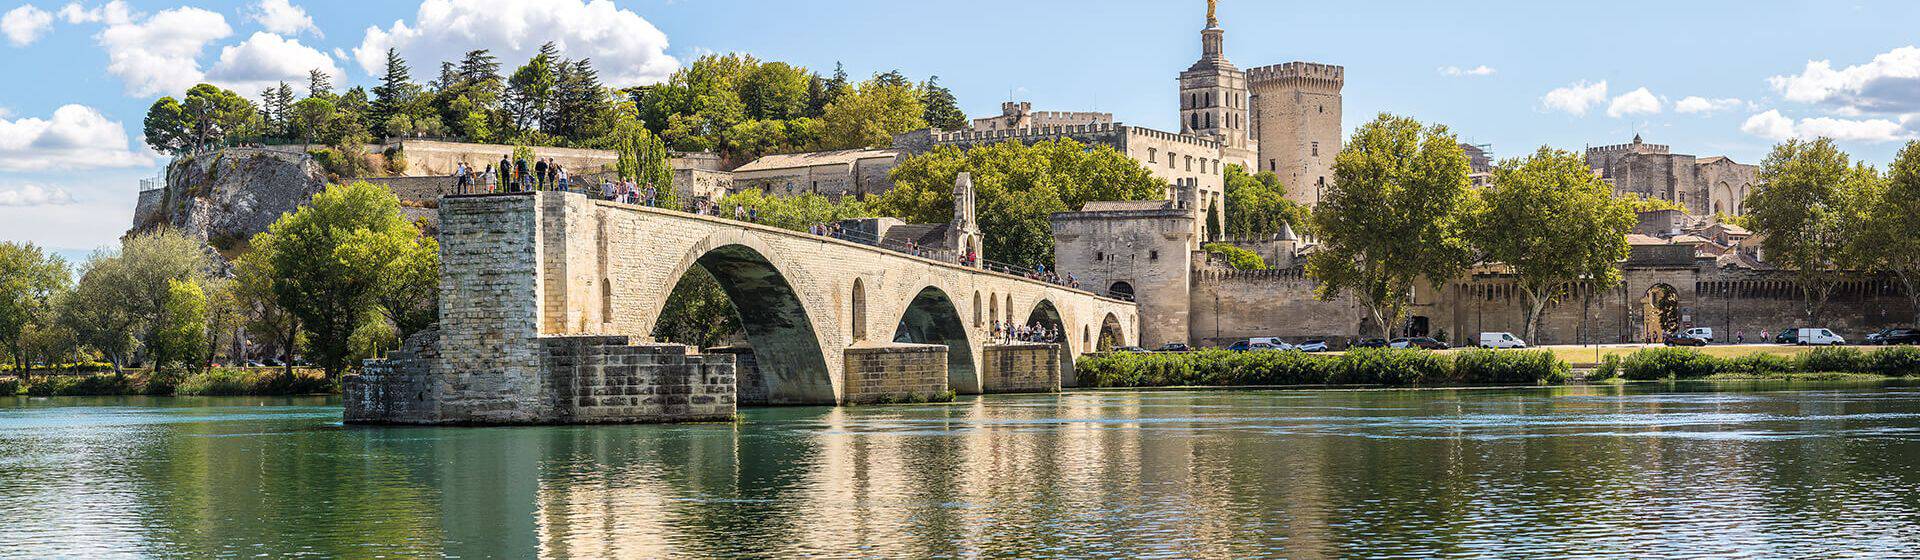 Holidays to Avignon Image